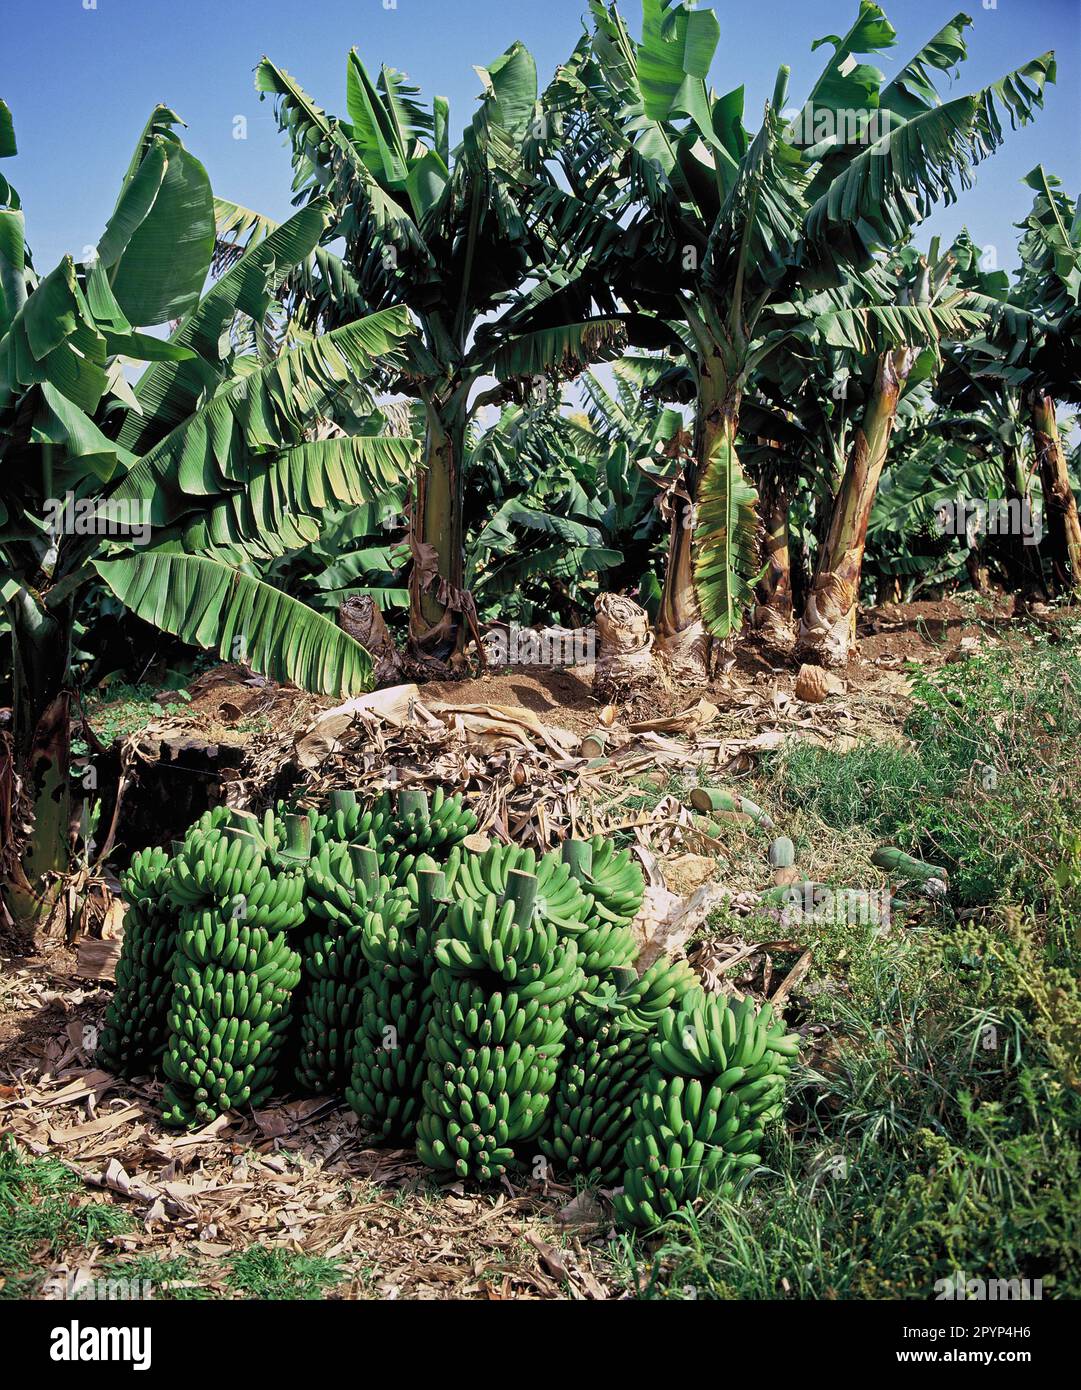 Canary Islands. Tenerife. Banana plantation with freshly cut bunches. Stock Photo